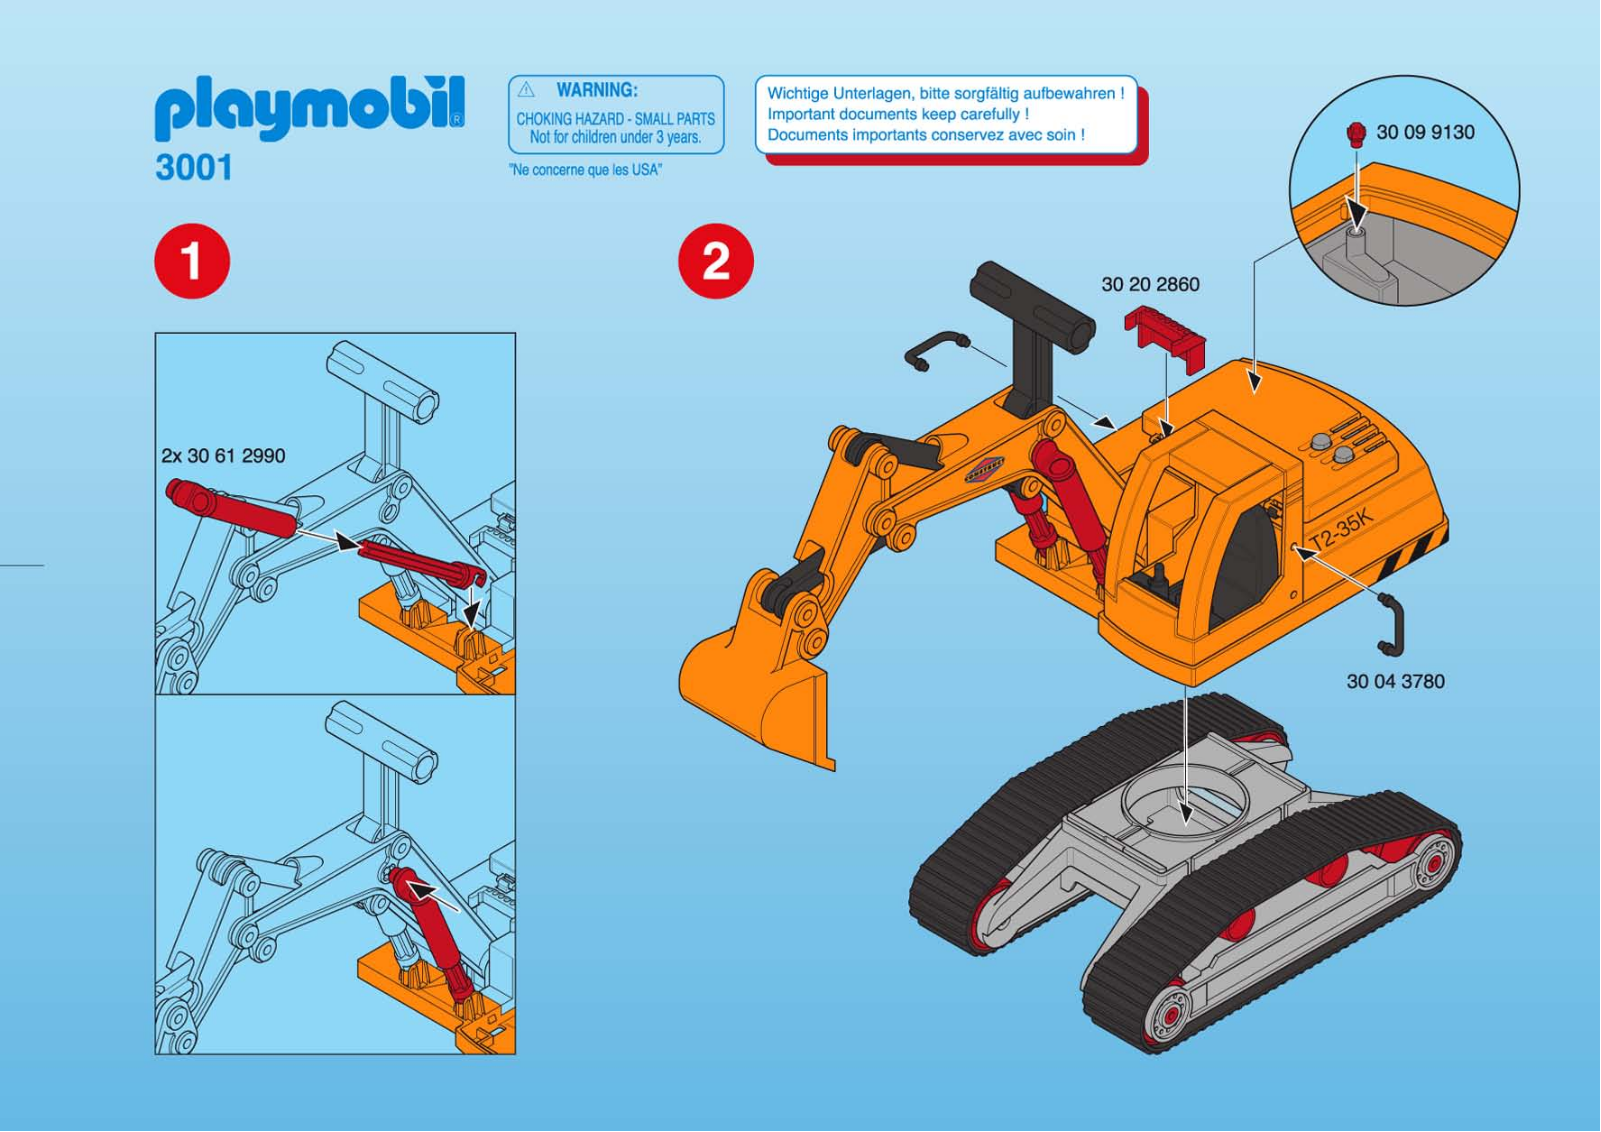 Playmobil 3001 Instructions